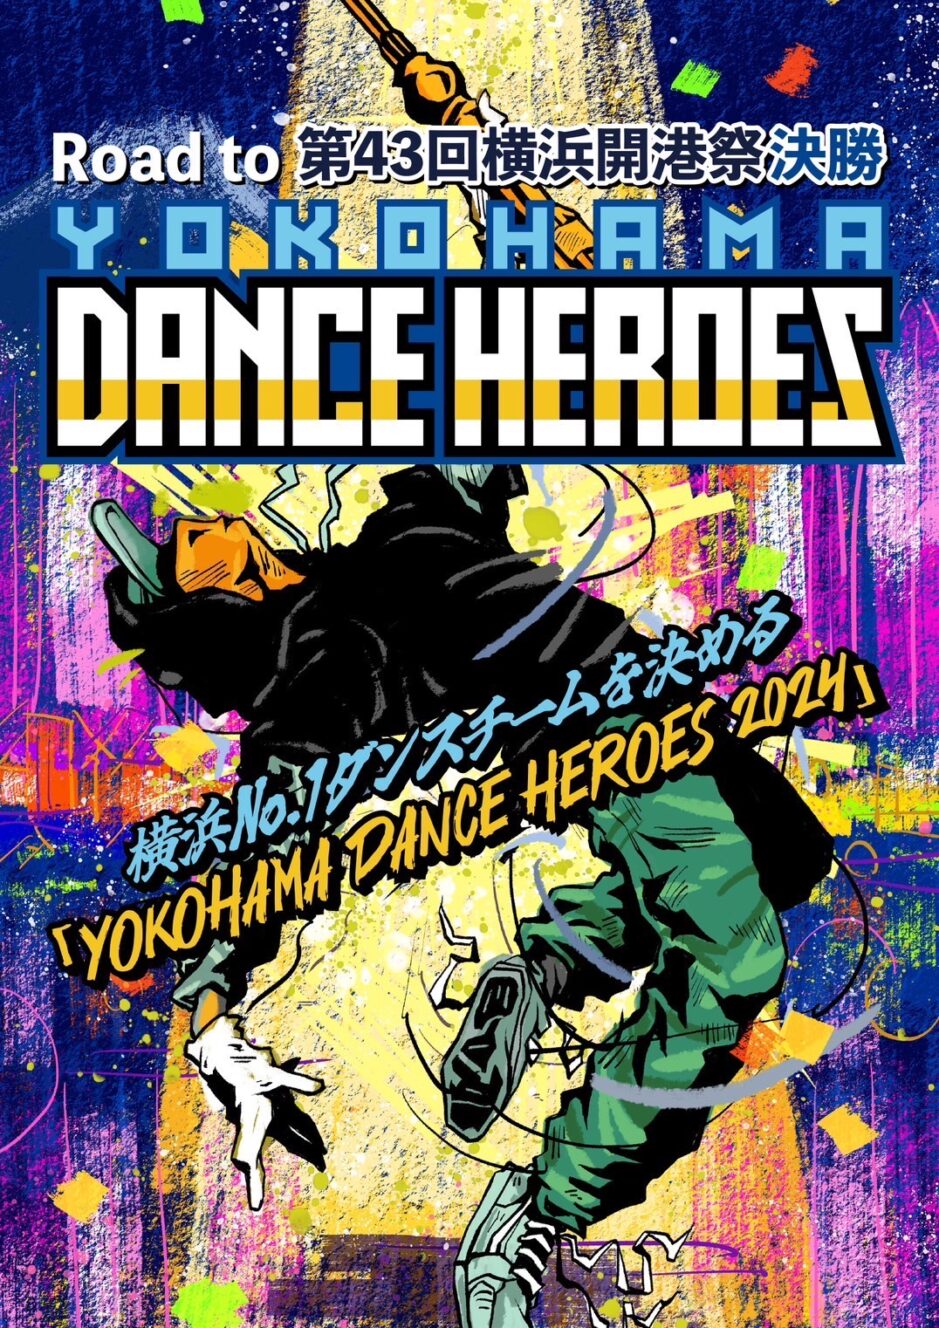 ROAD to横浜開港祭YOKOHAMA DANCE HEROS